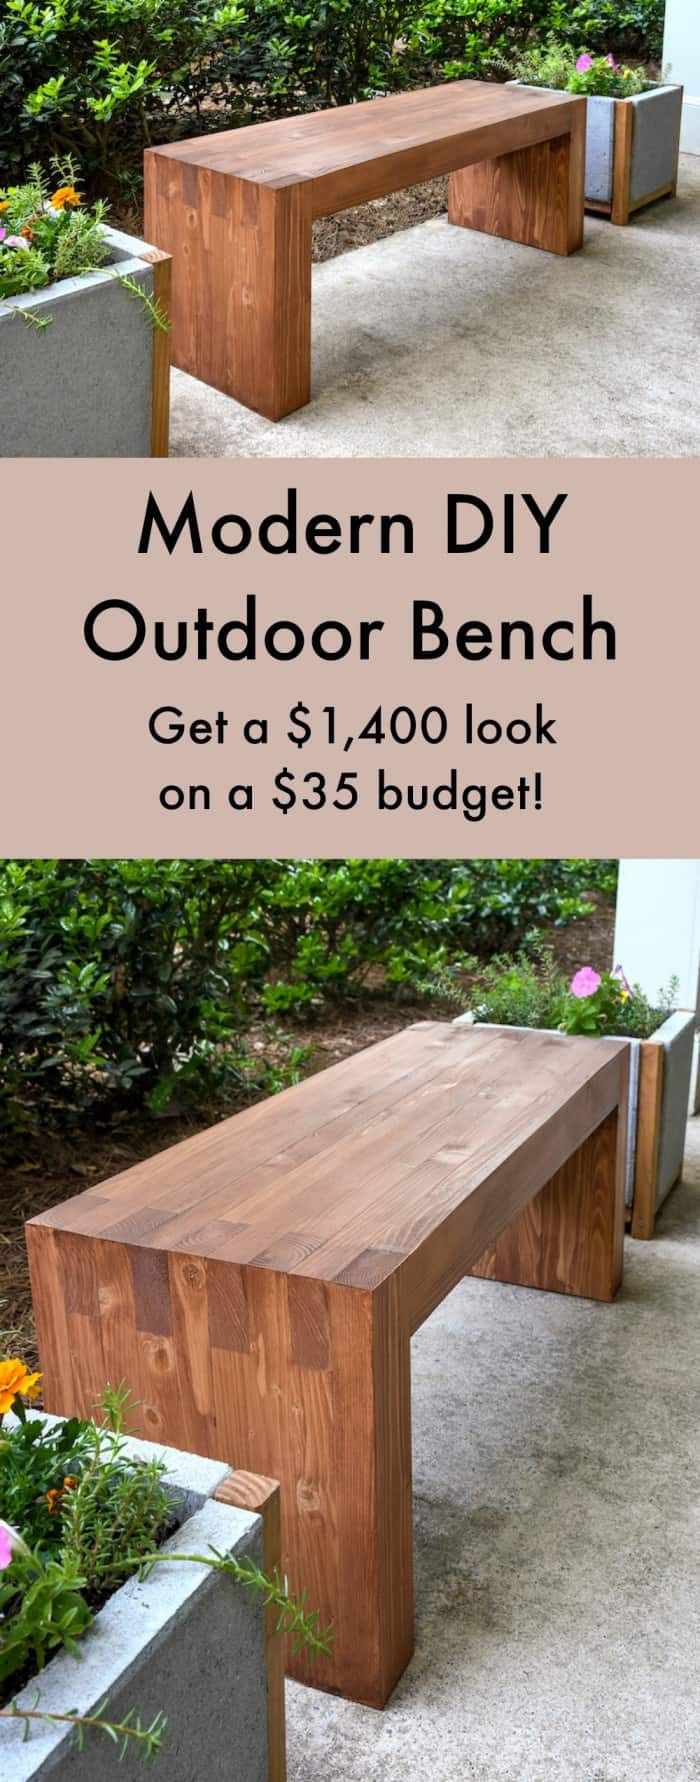 DIY Outdoor Wood Bench
 Williams Sonoma inspired DIY outdoor bench diycandy